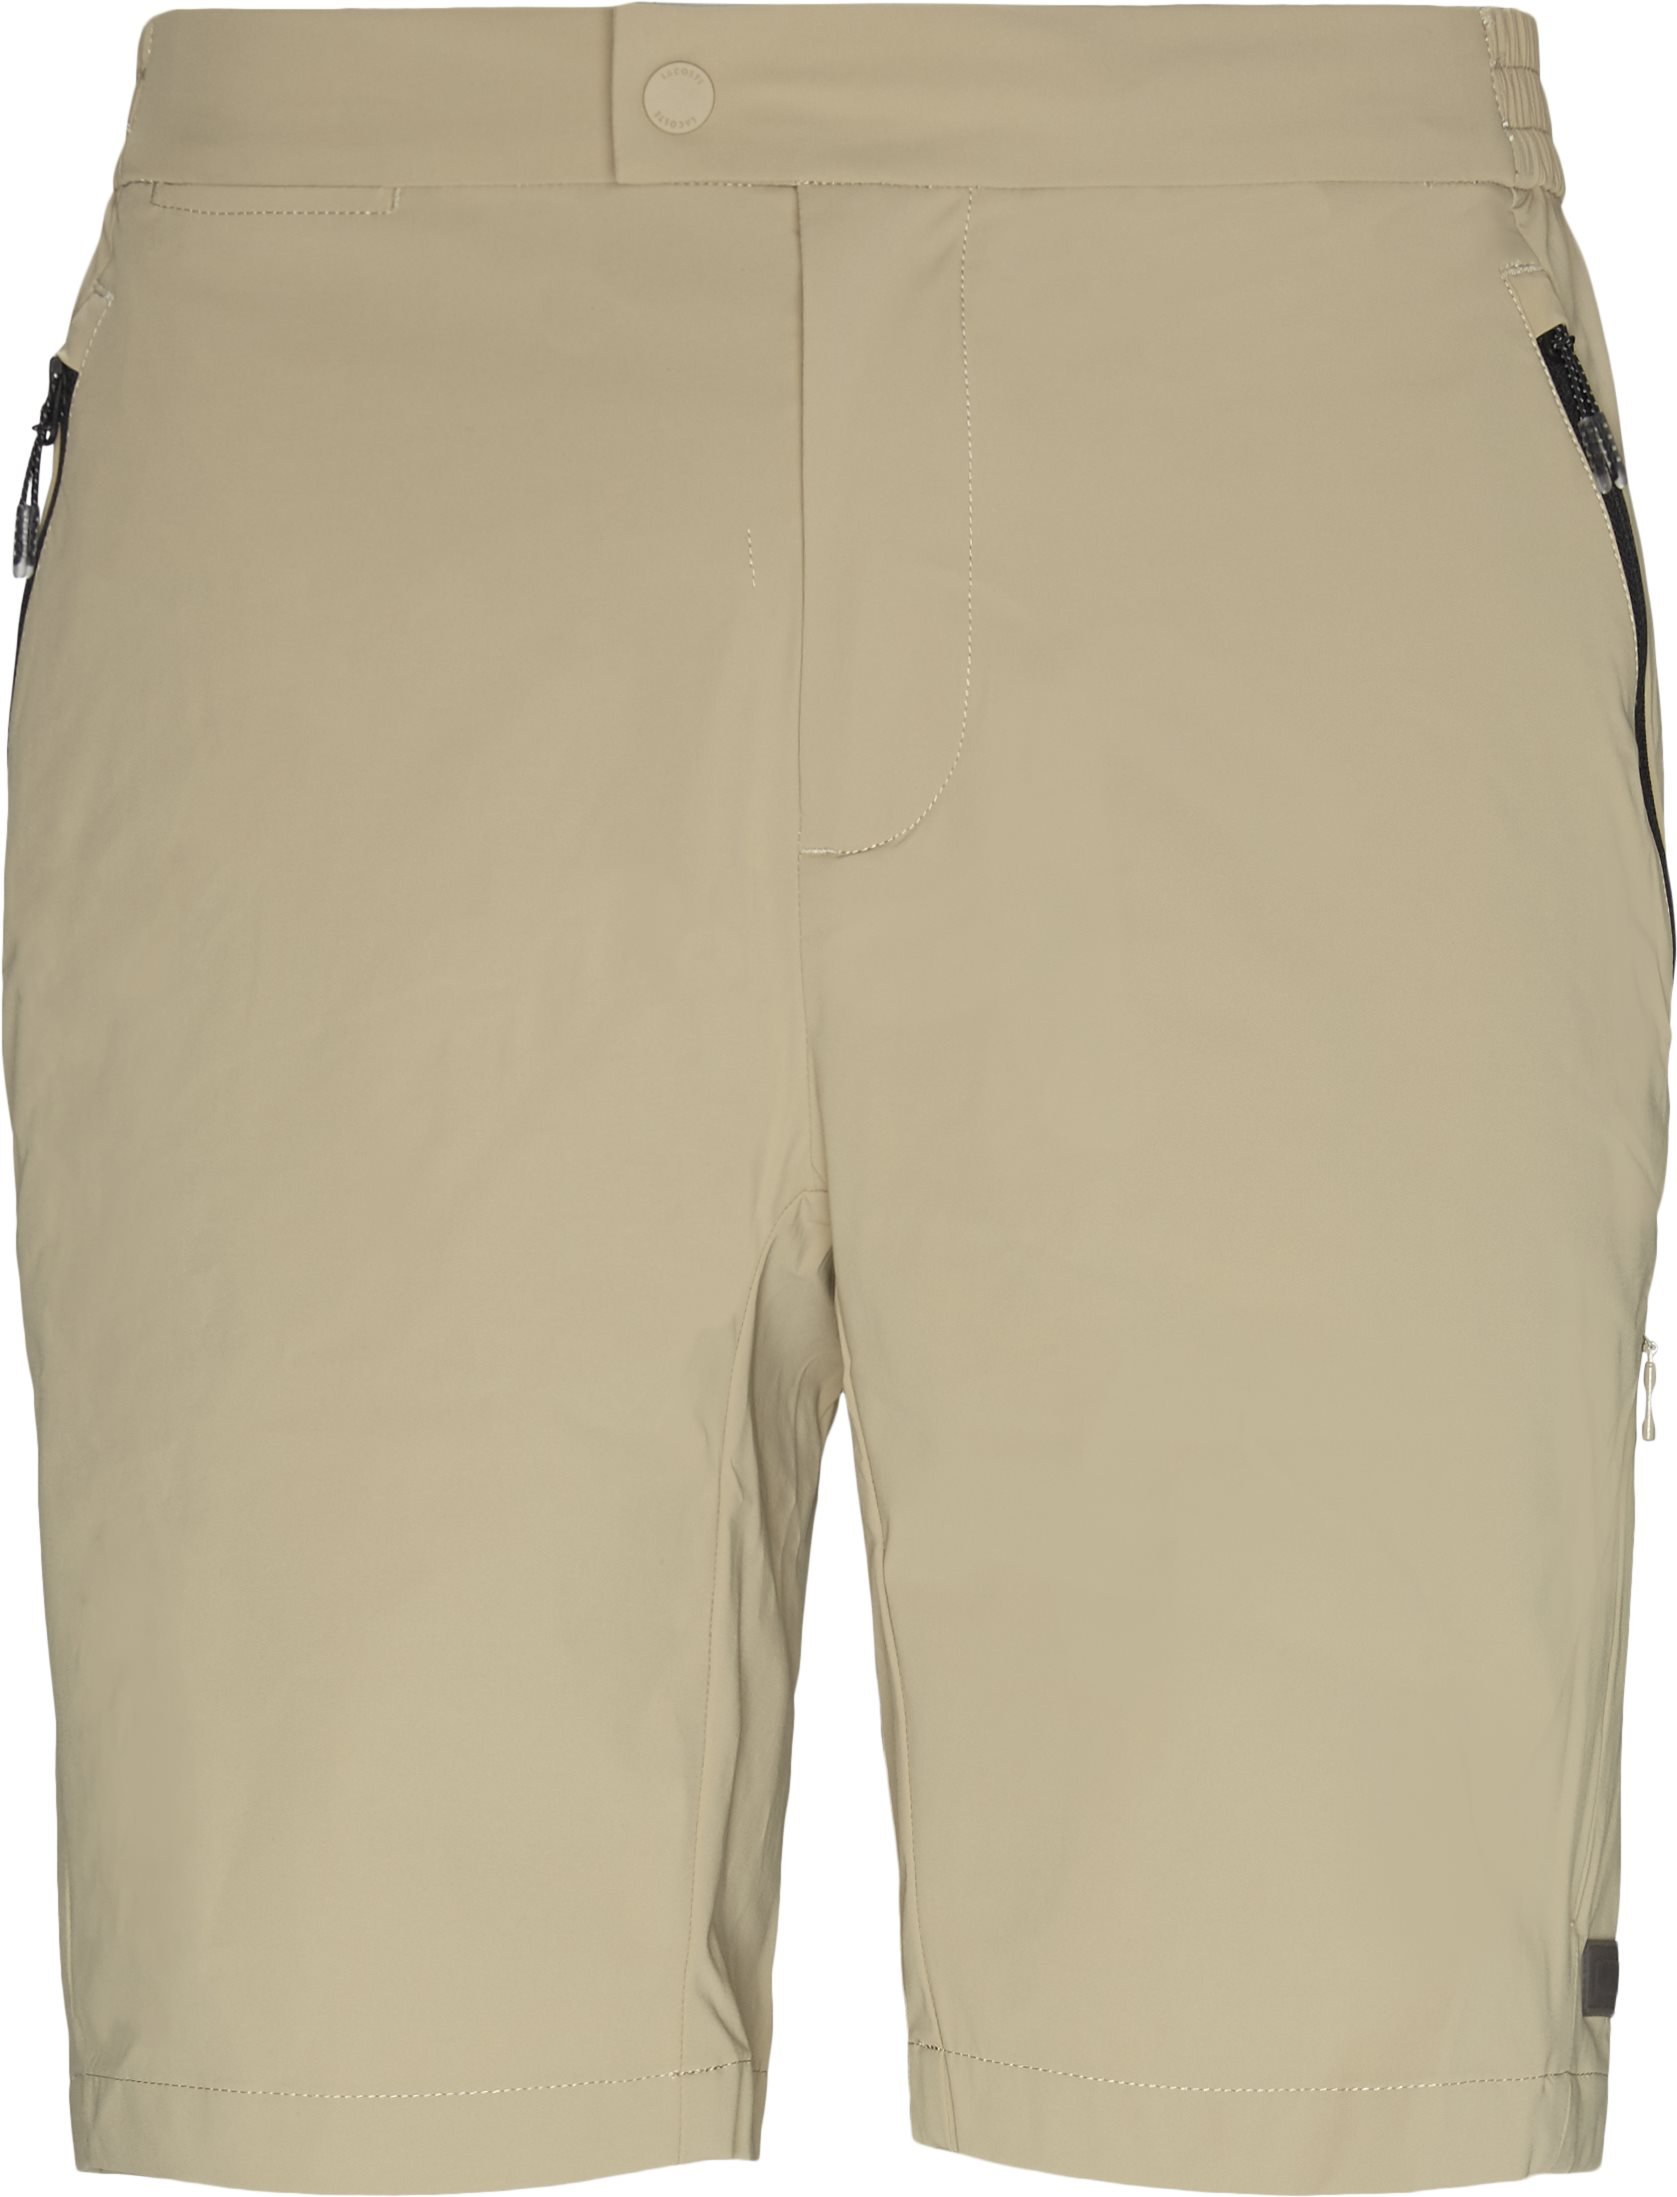 Motion Ergonomic Bermuda Shorts - Shorts - Regular fit - Sand